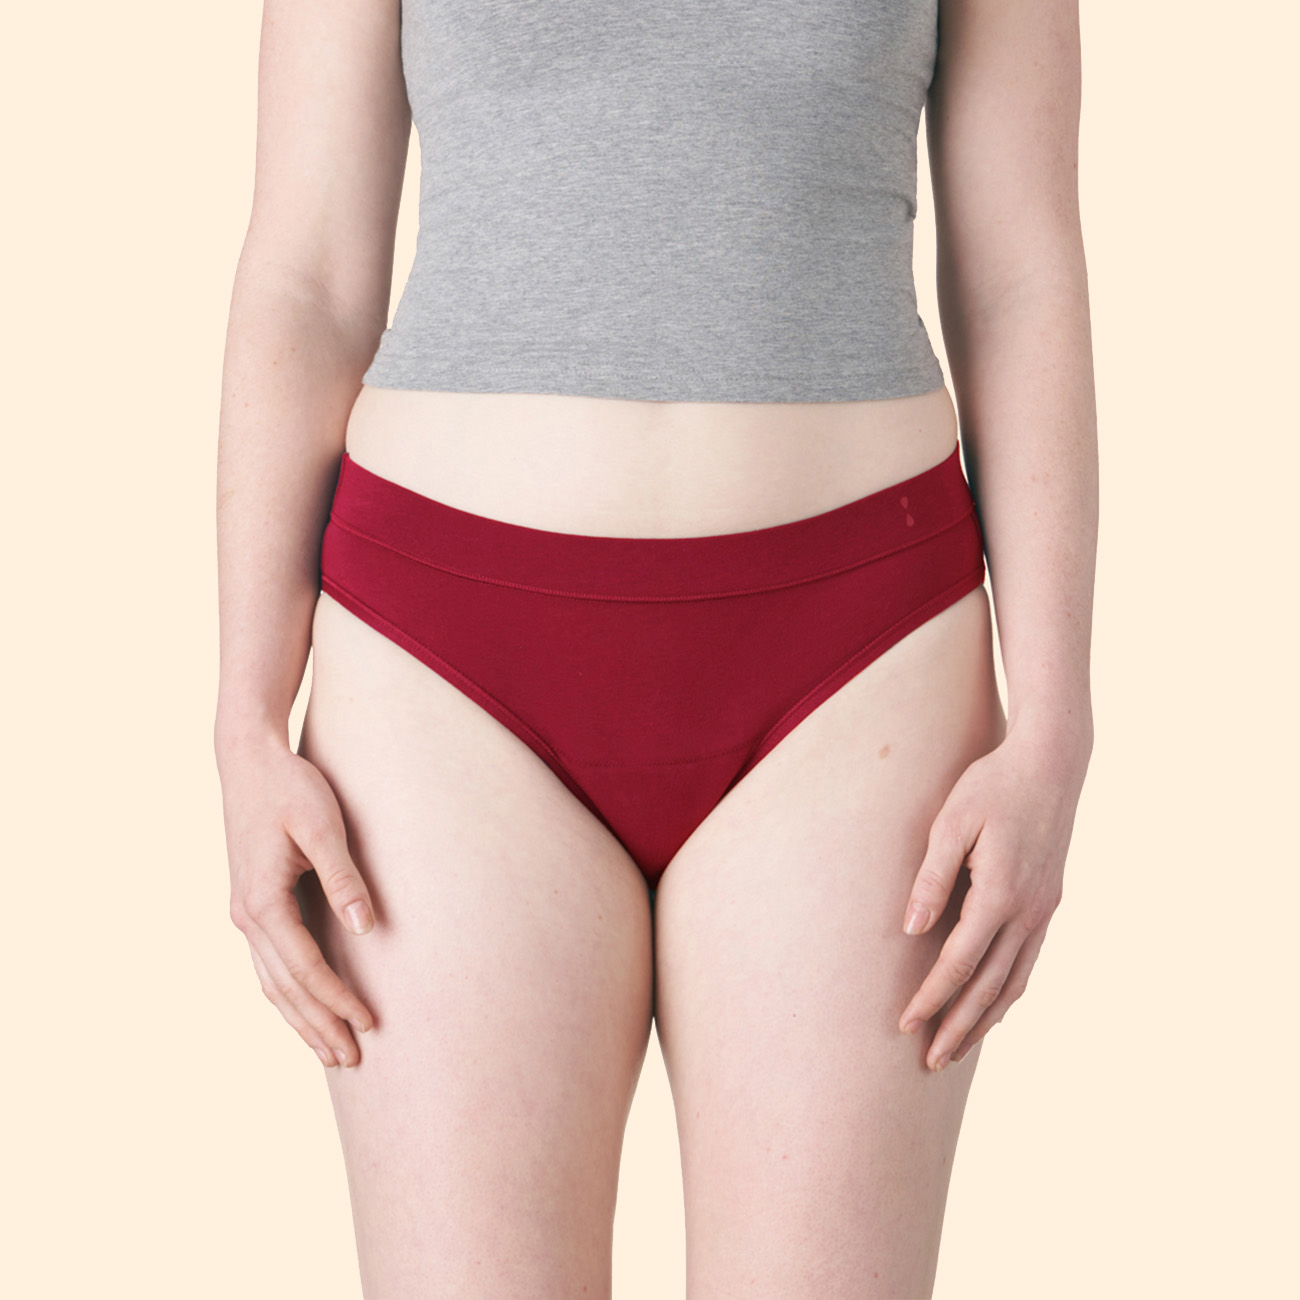 x2 Thinx for All Womens Bikini Period Underwear, moderate